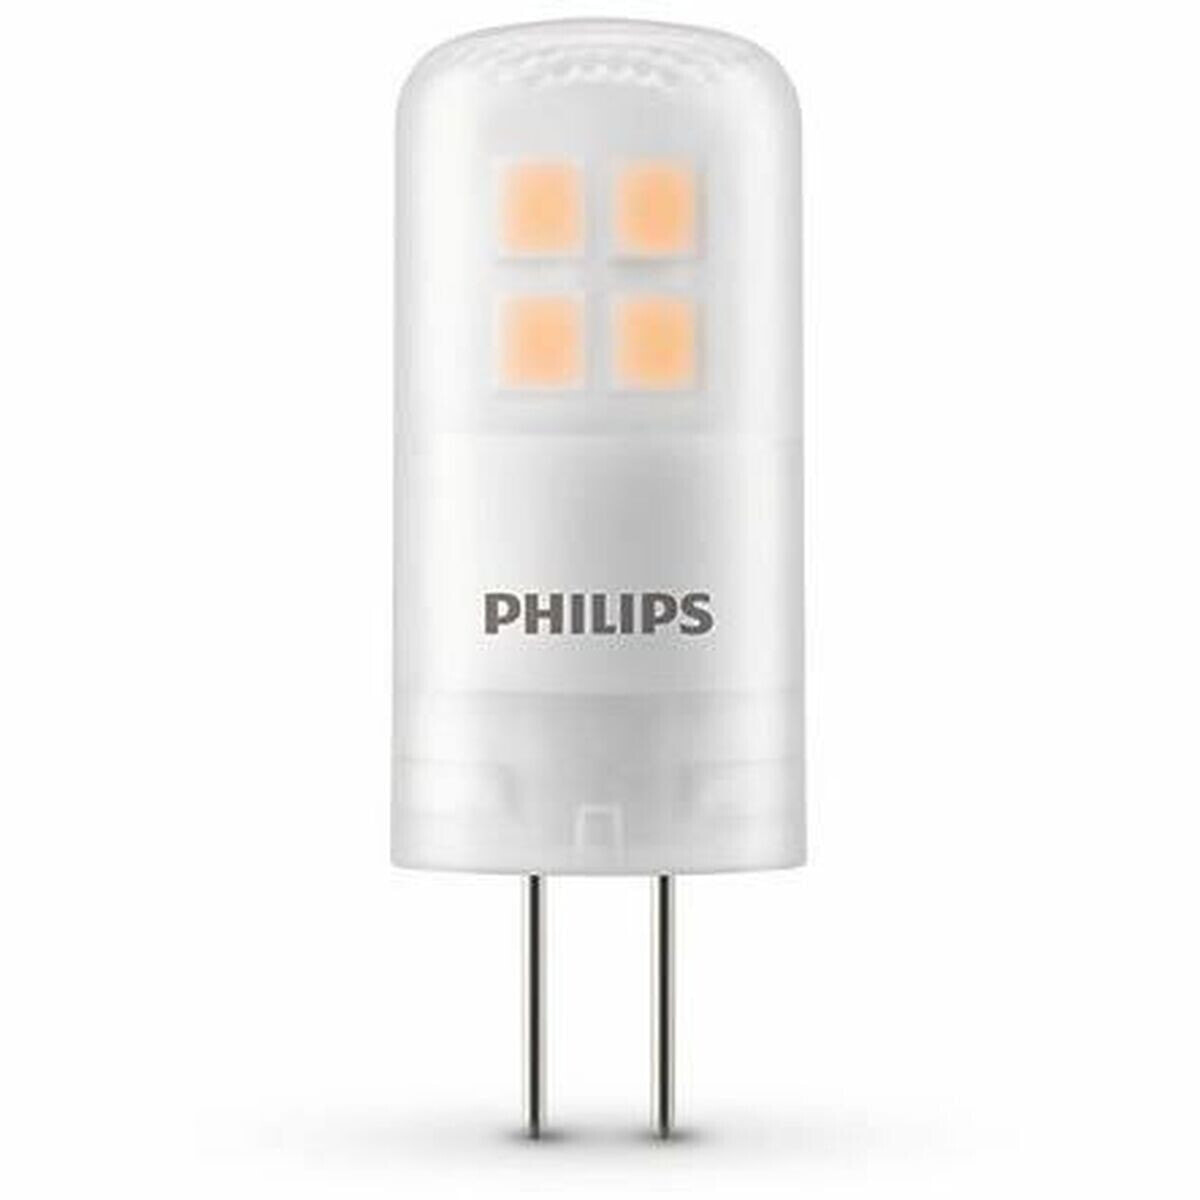 LED lamp Philips 8718699767679 20 W G4 12 V White E (3000K)